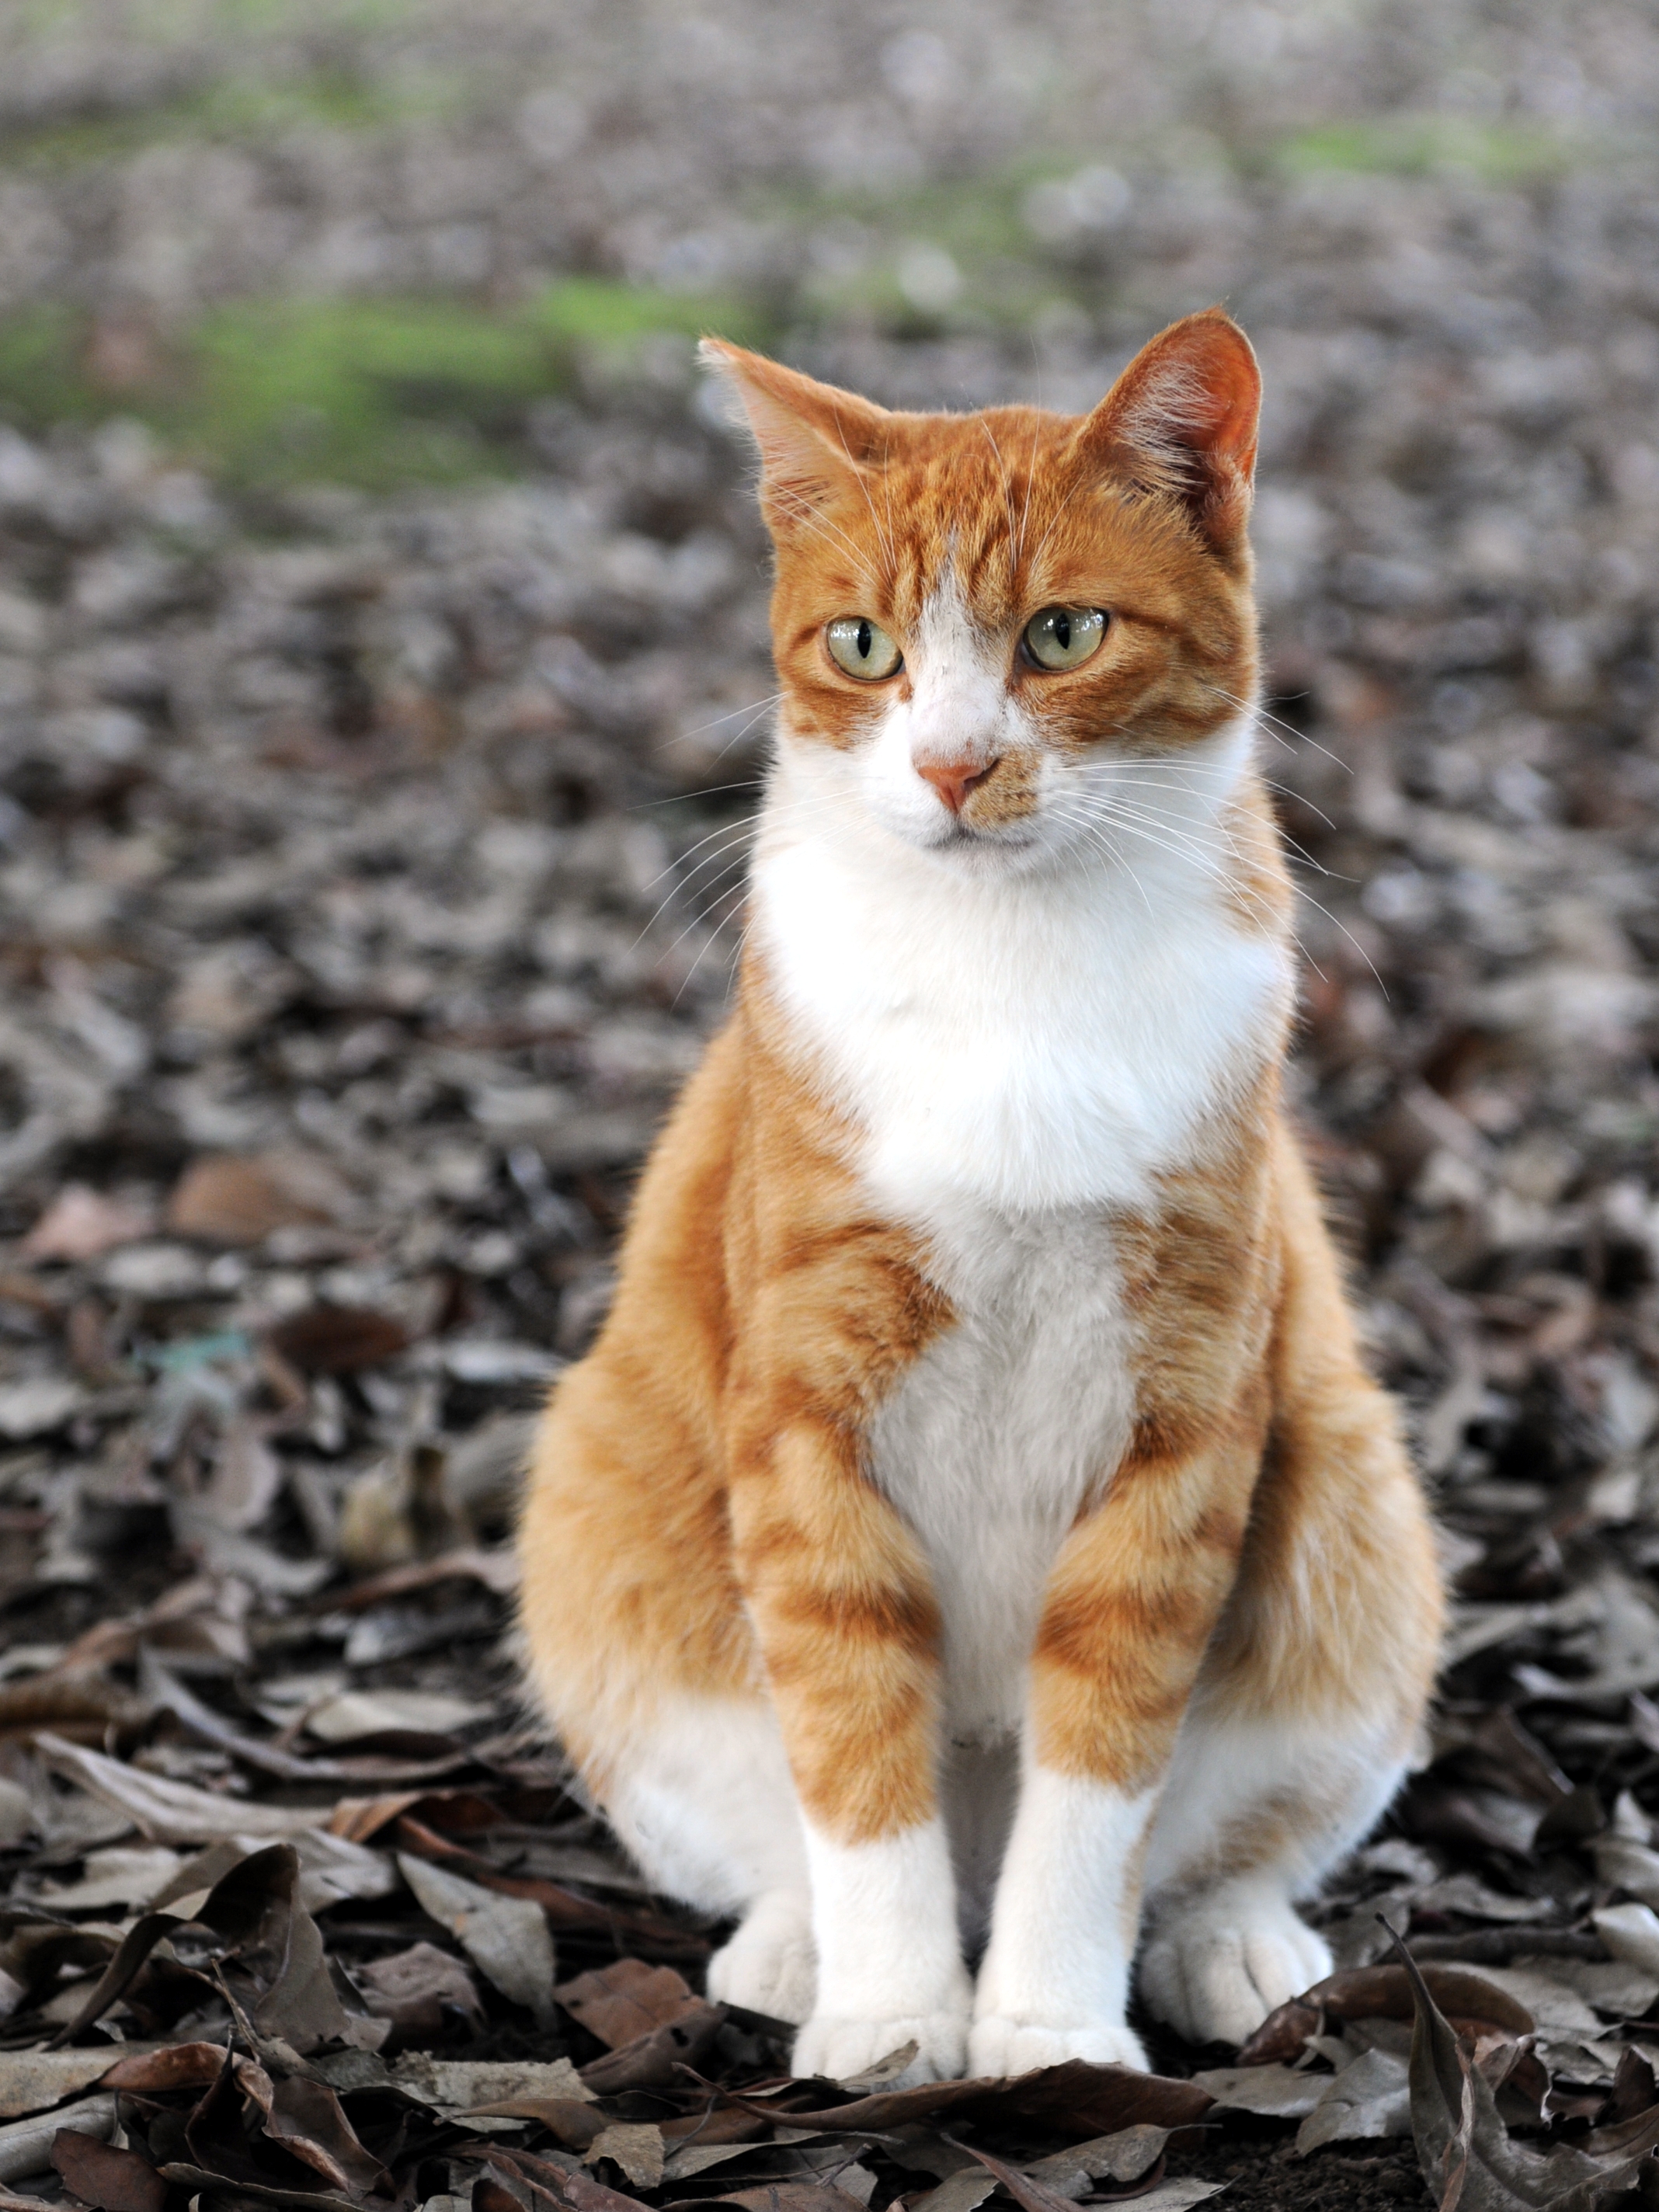 Orange tabby cat sitting on fallen leaves-Hisashi-01A